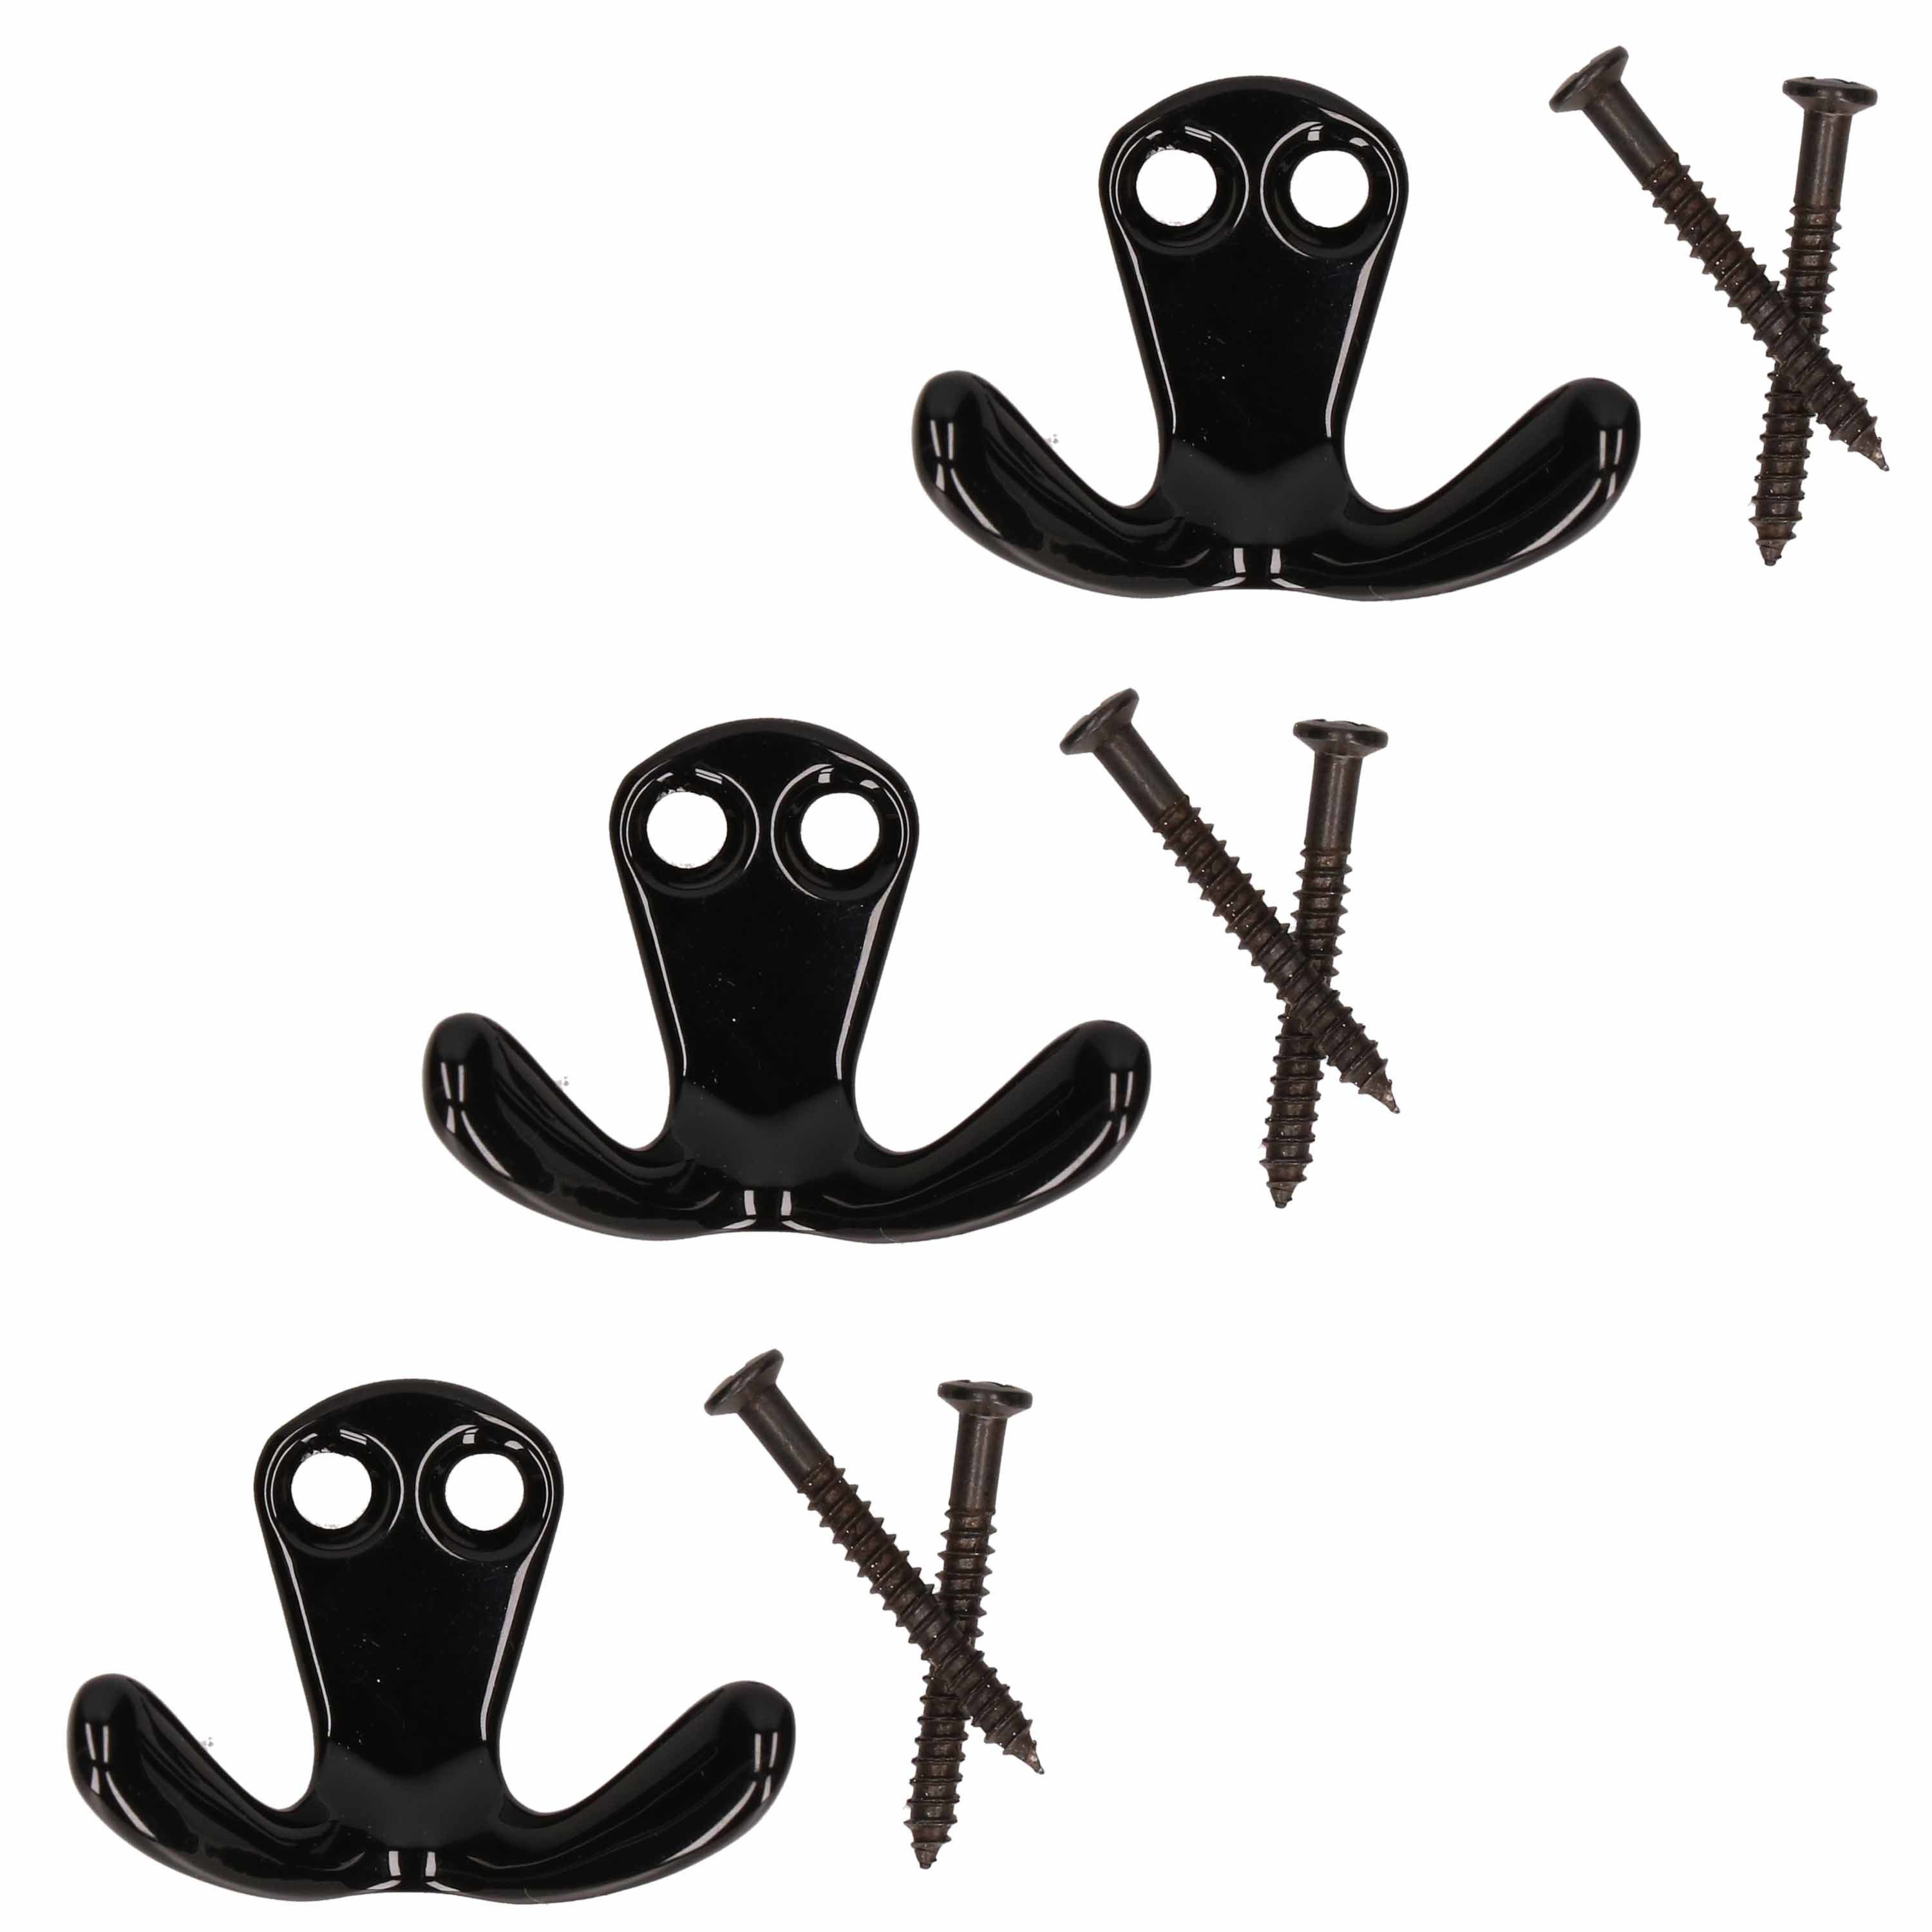 6x Luxe kapstokhaken-jashaken-kapstokhaakjes zwart van hoogwaardig metaal 2,2 x 3,3 cm